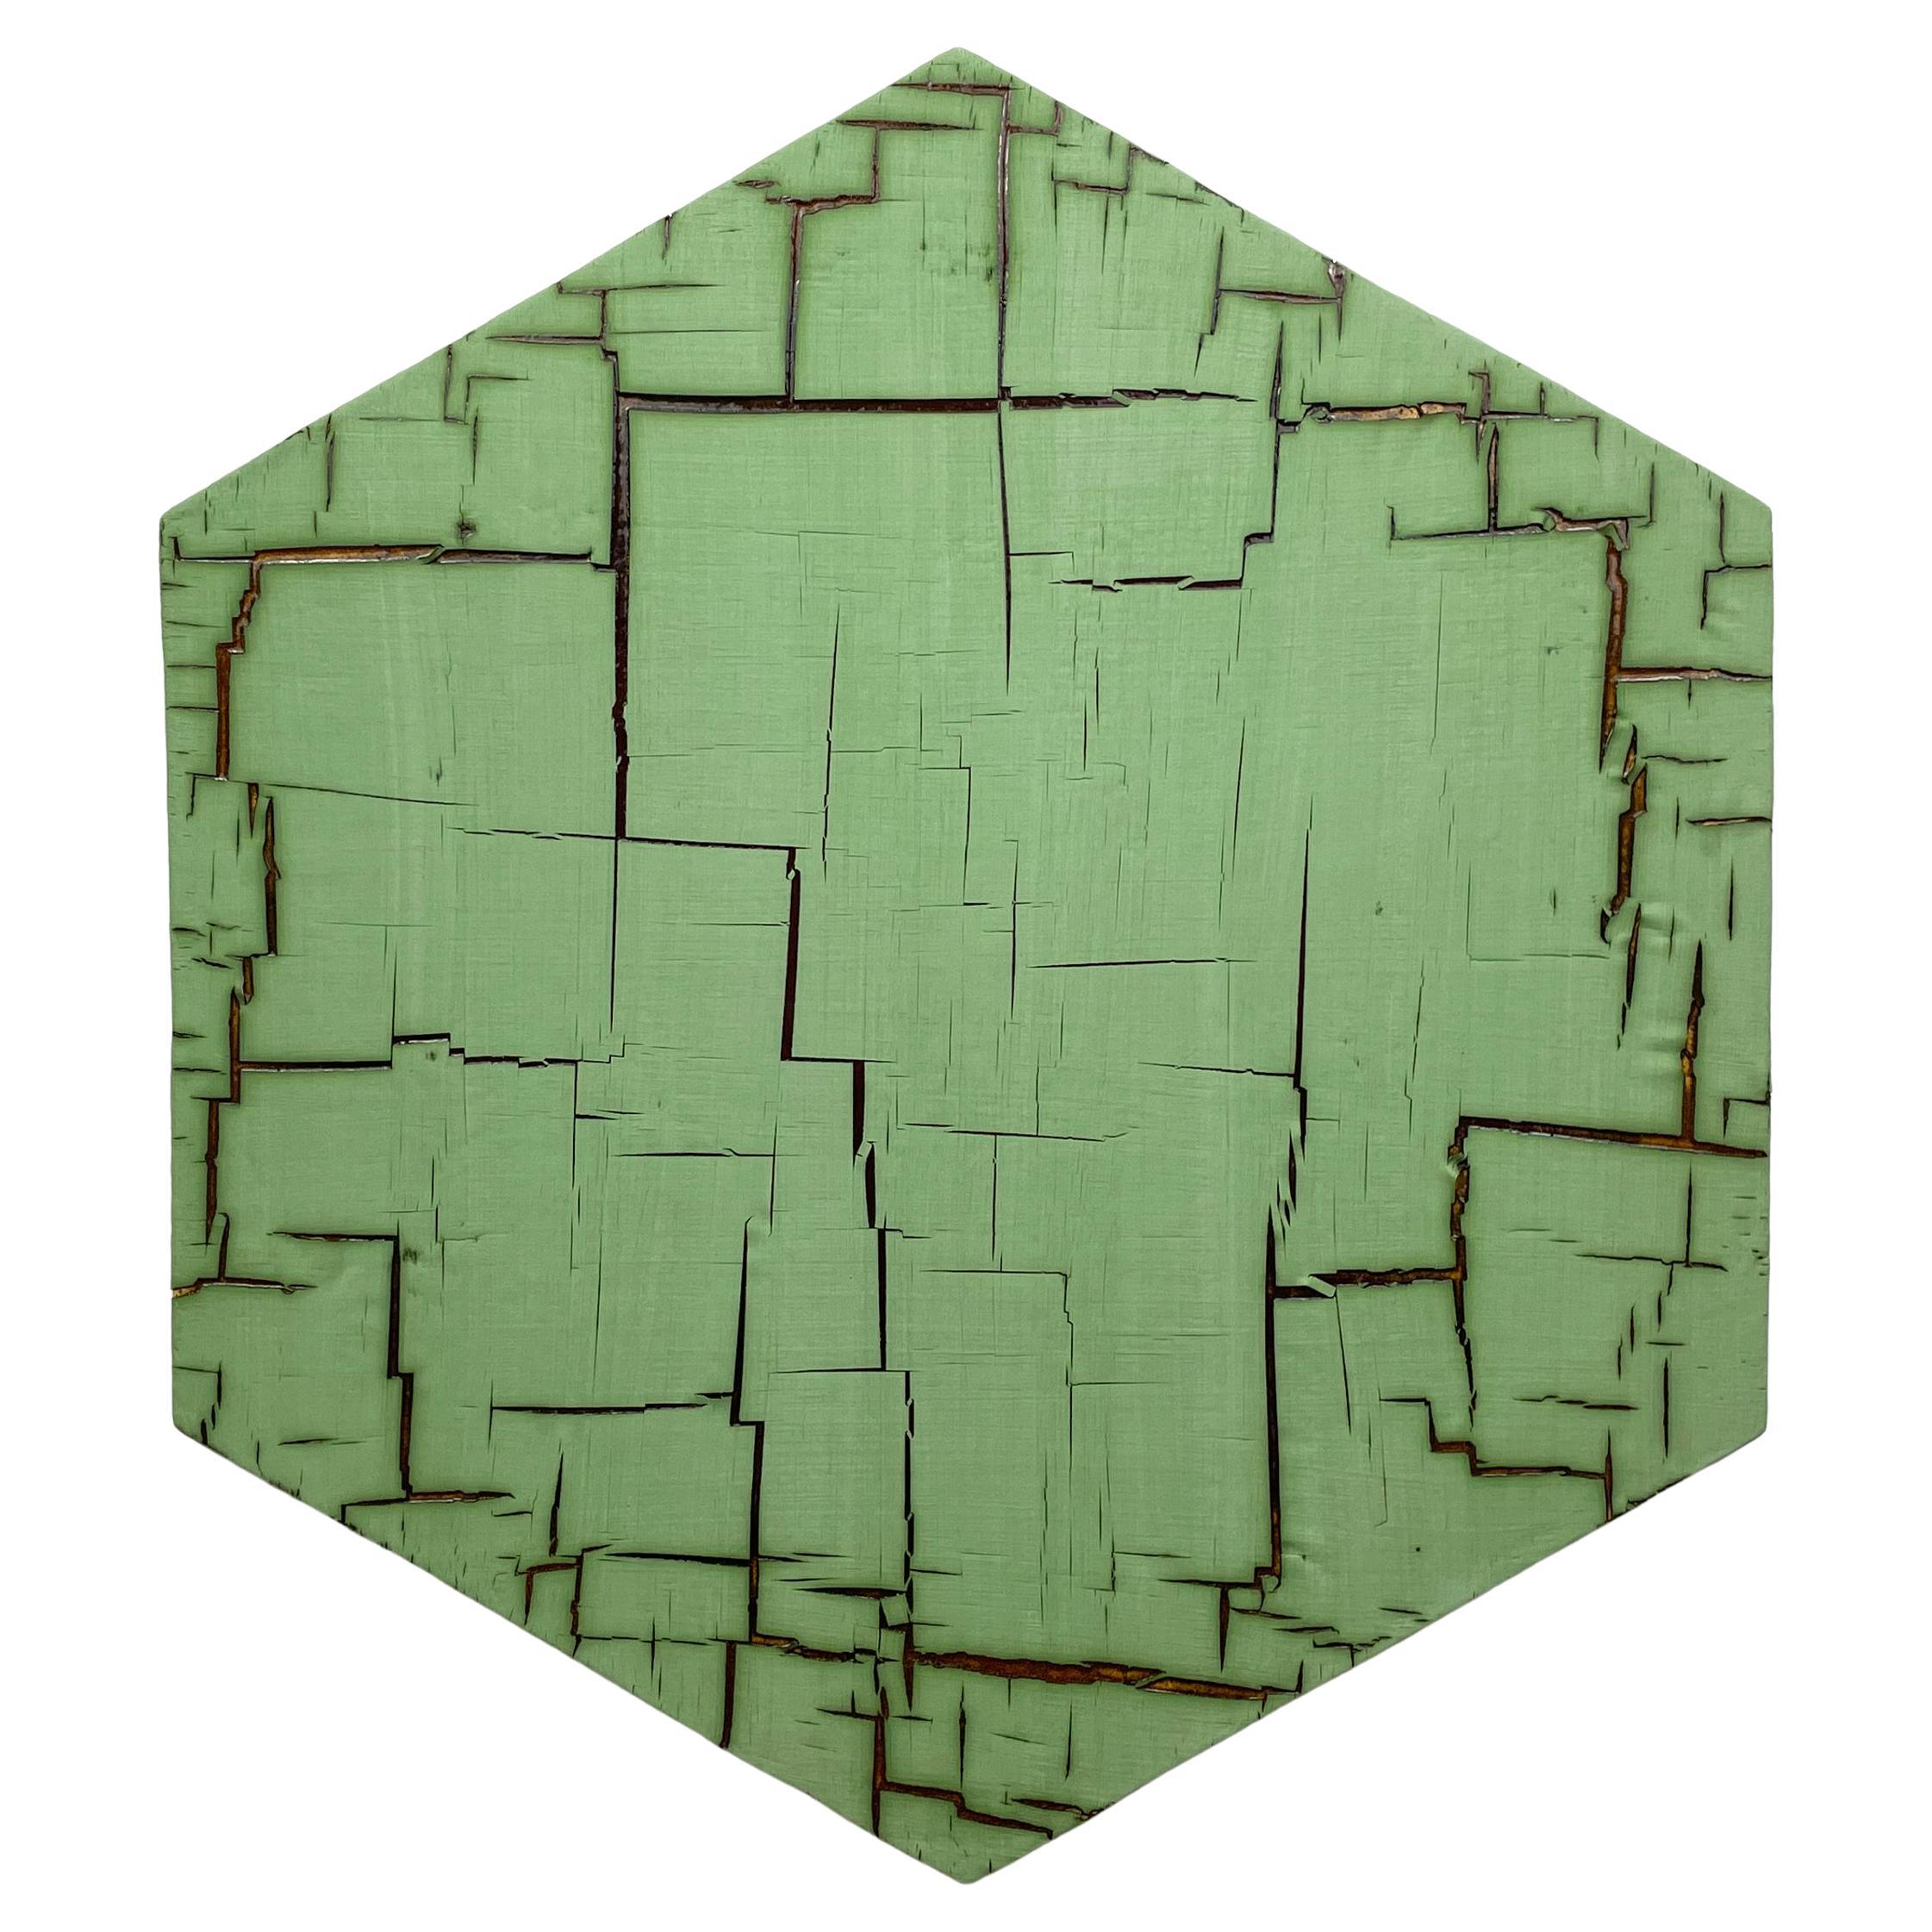 Green Matrix - Ceramic wall art by William Edwards